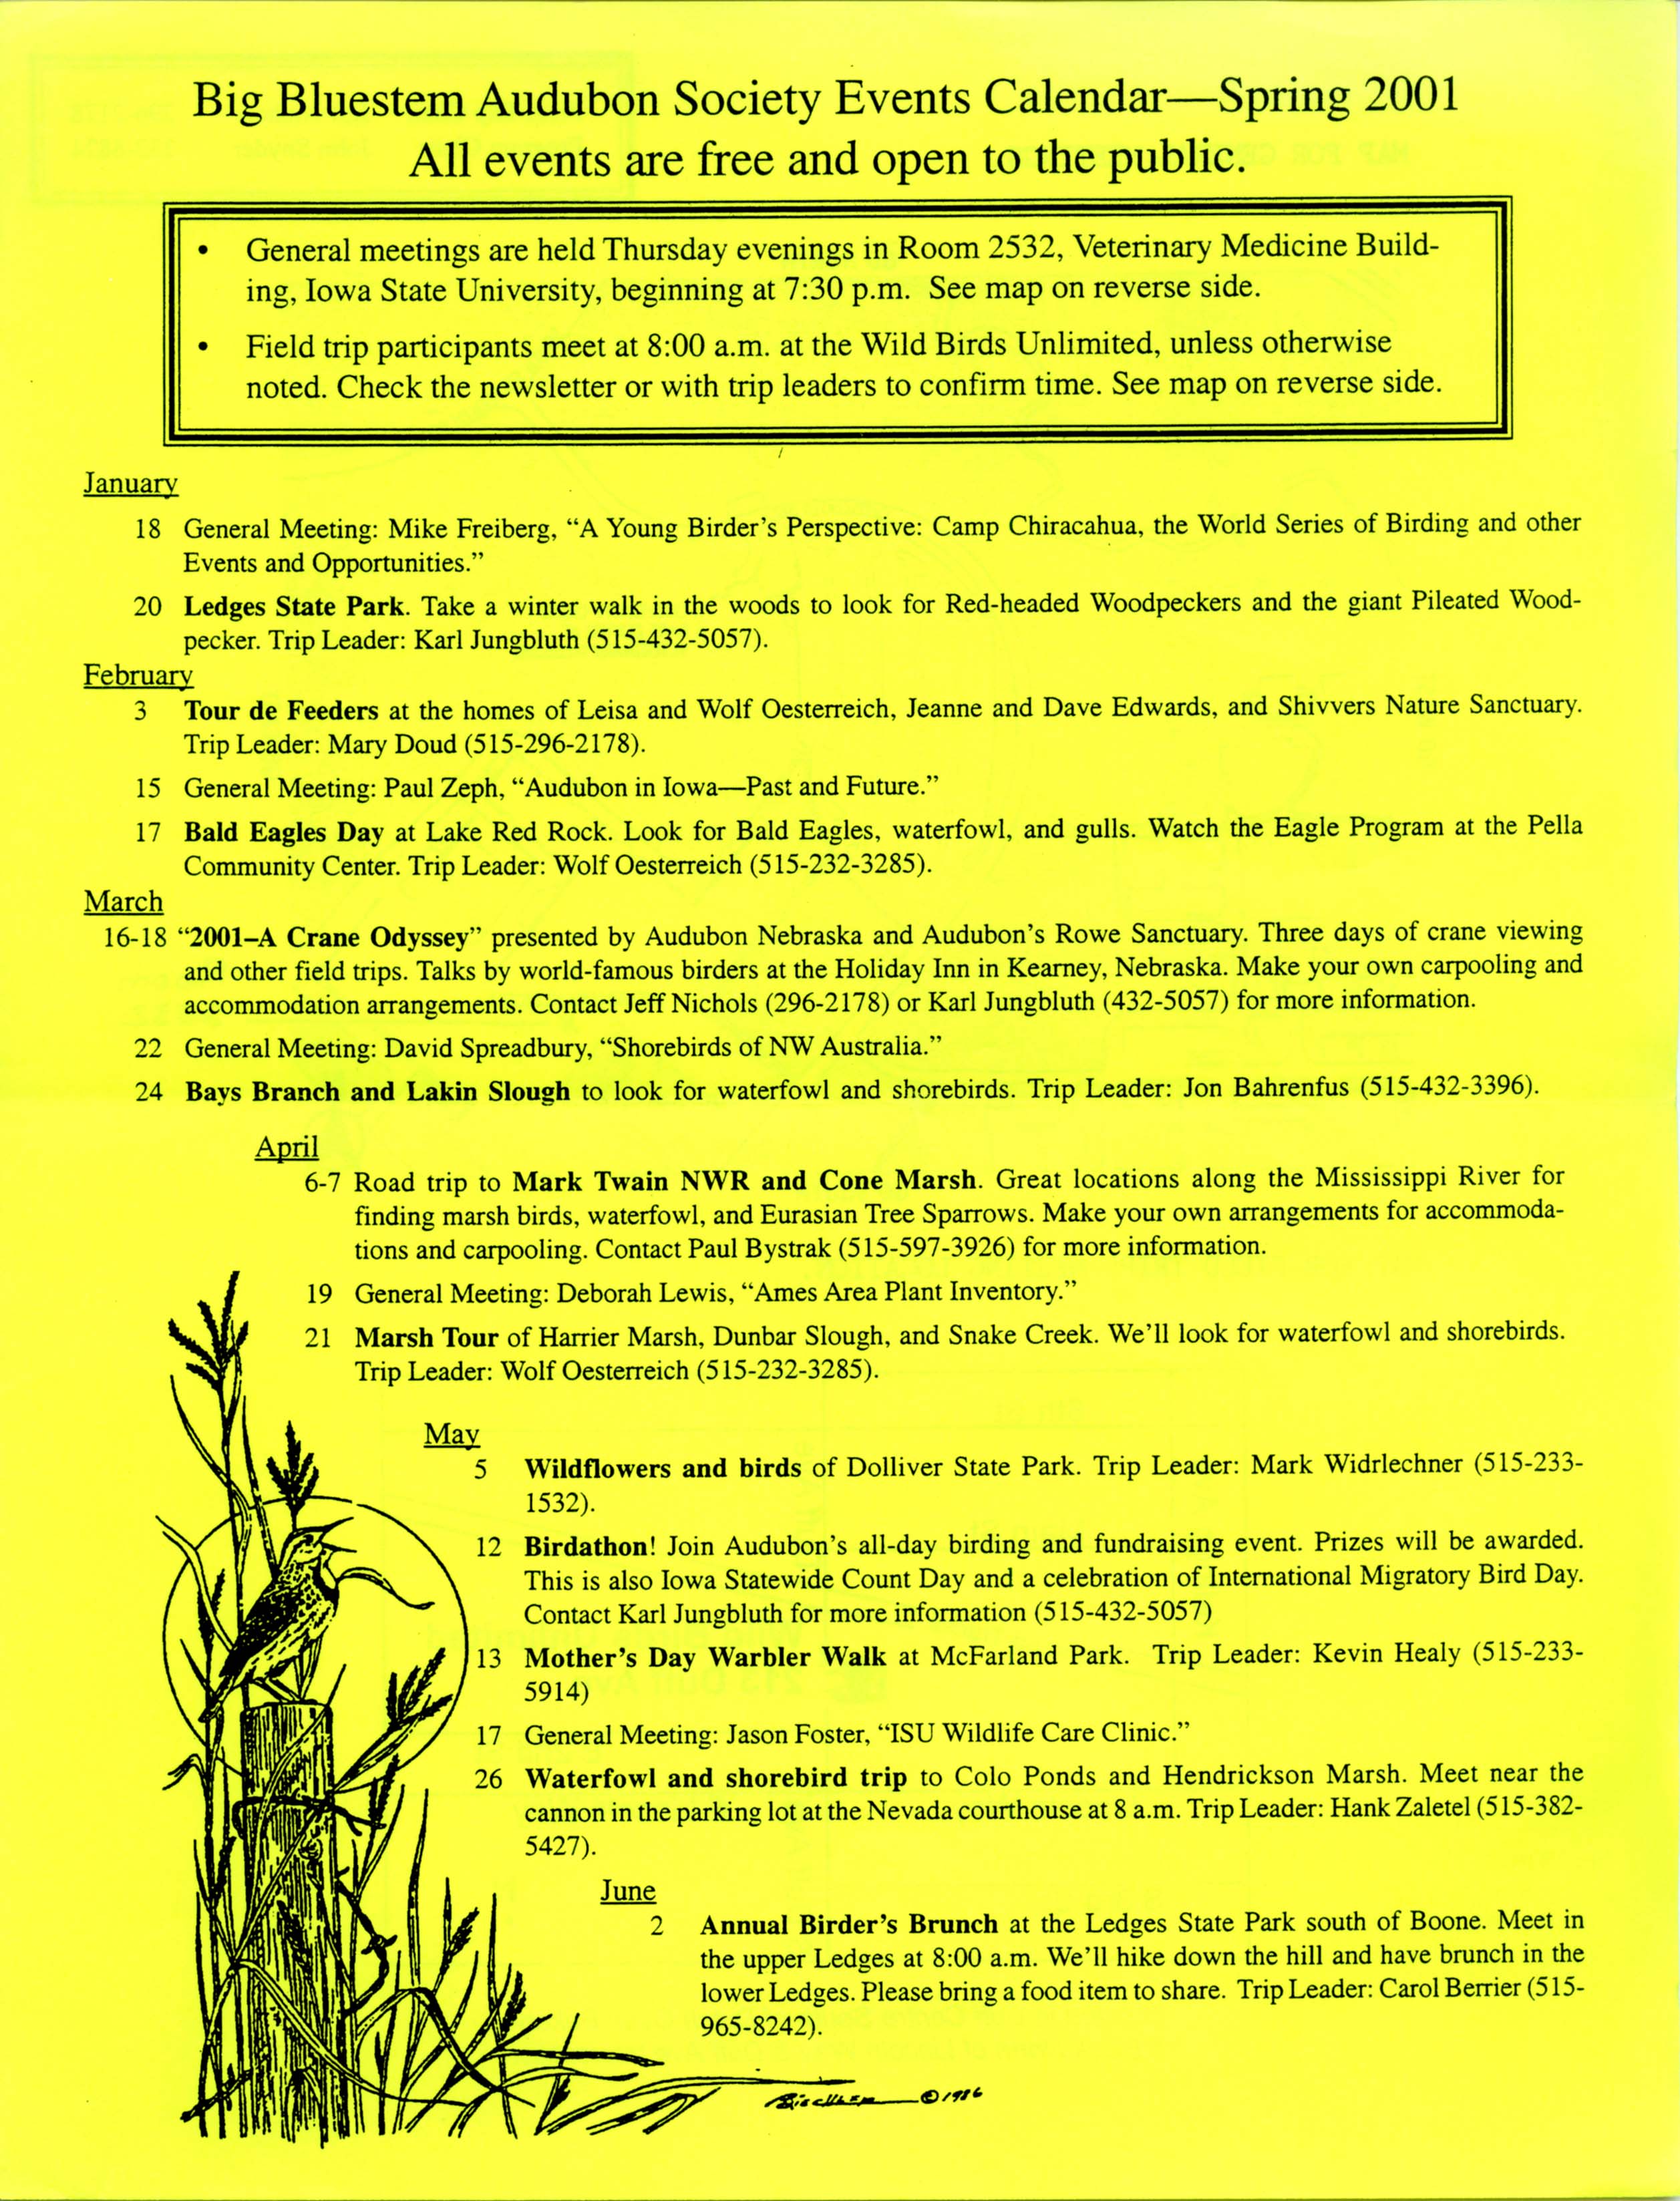 Big Bluestem Audubon Society Events Calendar, spring 2001